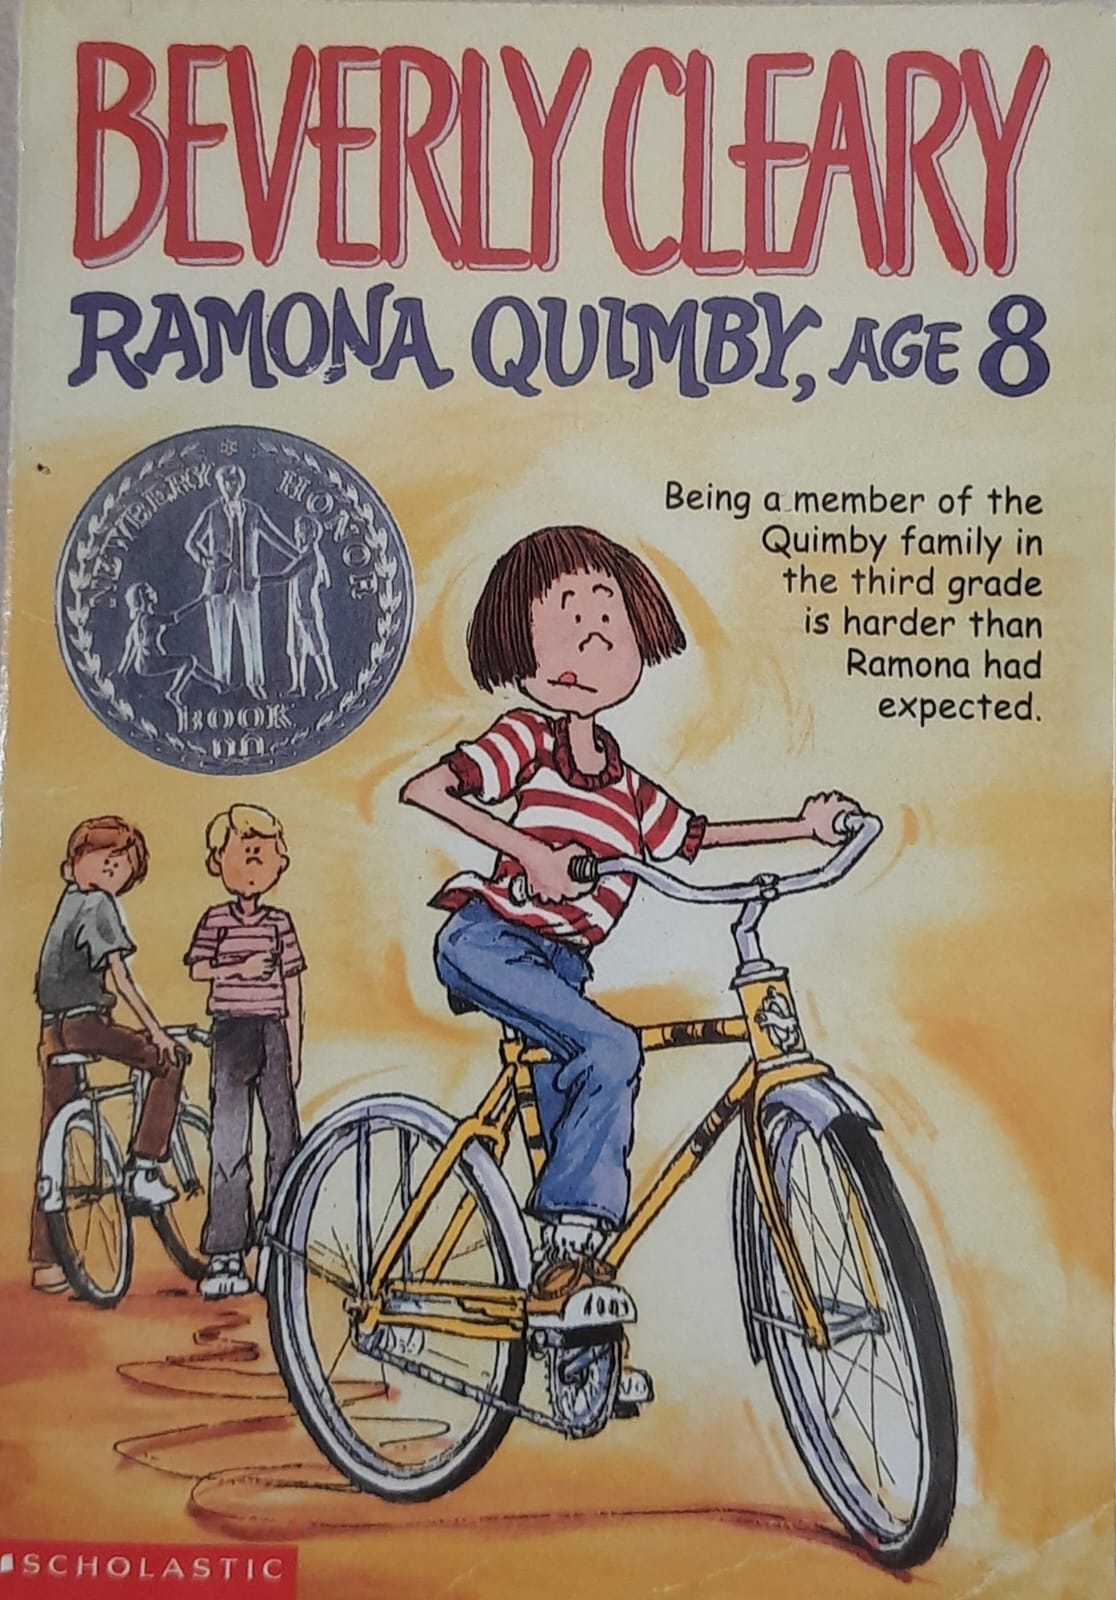 IMG : Ramona Quimby, Age 8